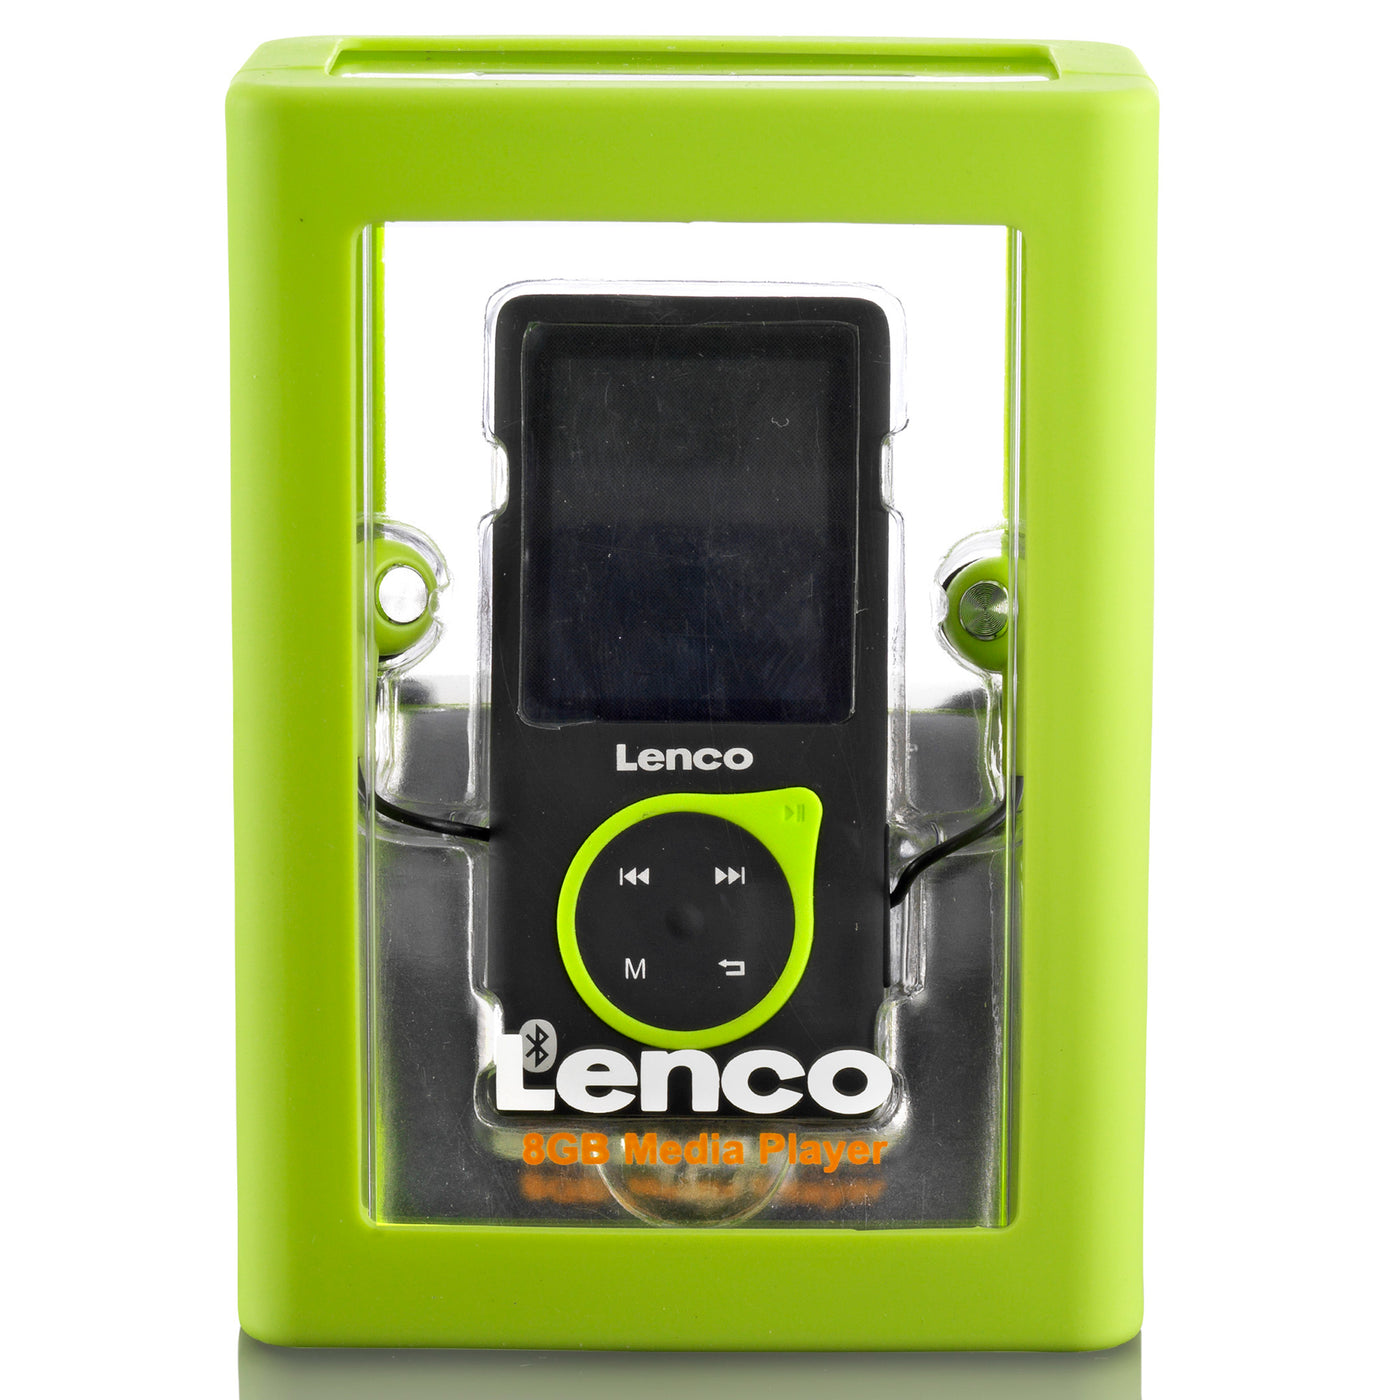 Webshop offiziellen Lime Lenco kaufen? Lenco | XEMIO-768 im Offizieller Lenco.de Webshop – Jetzt -